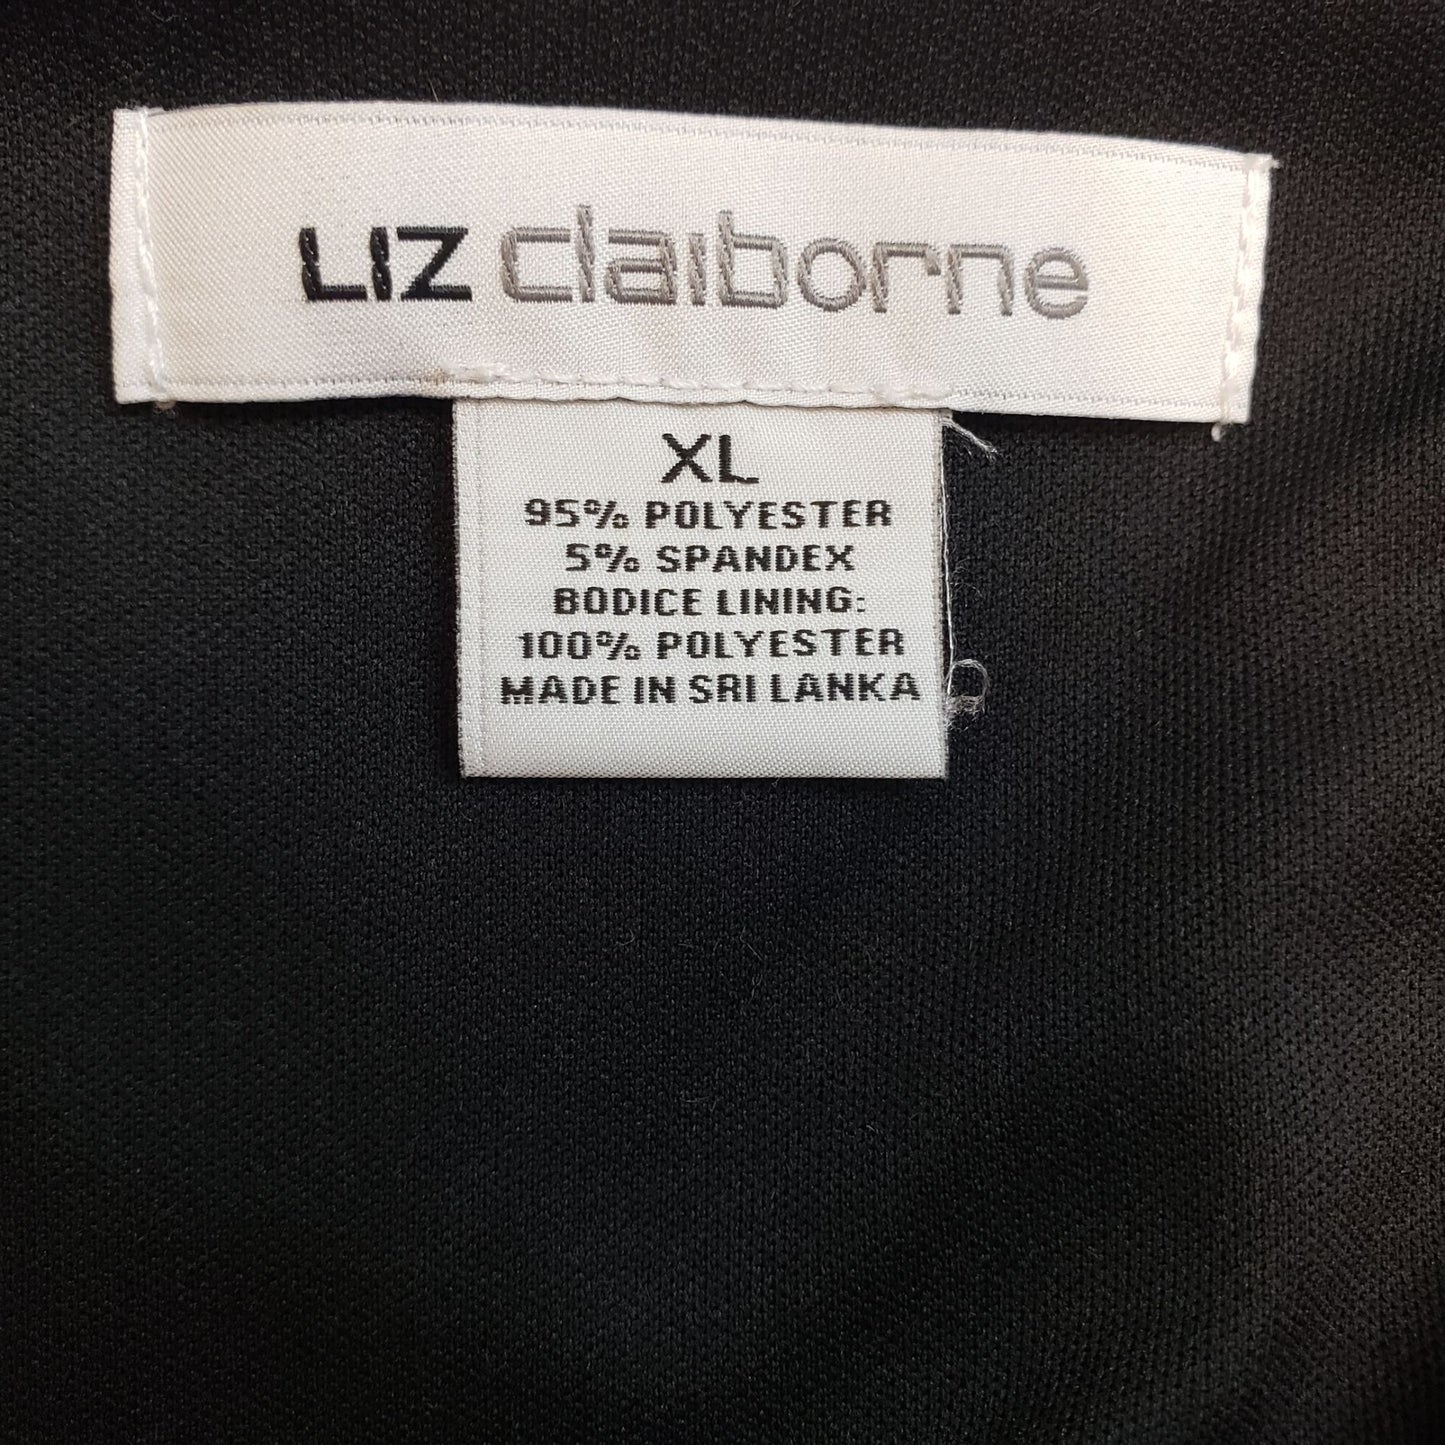 Liz Claiborne Graphic Print Sleeveless Maxi Dress Size XL